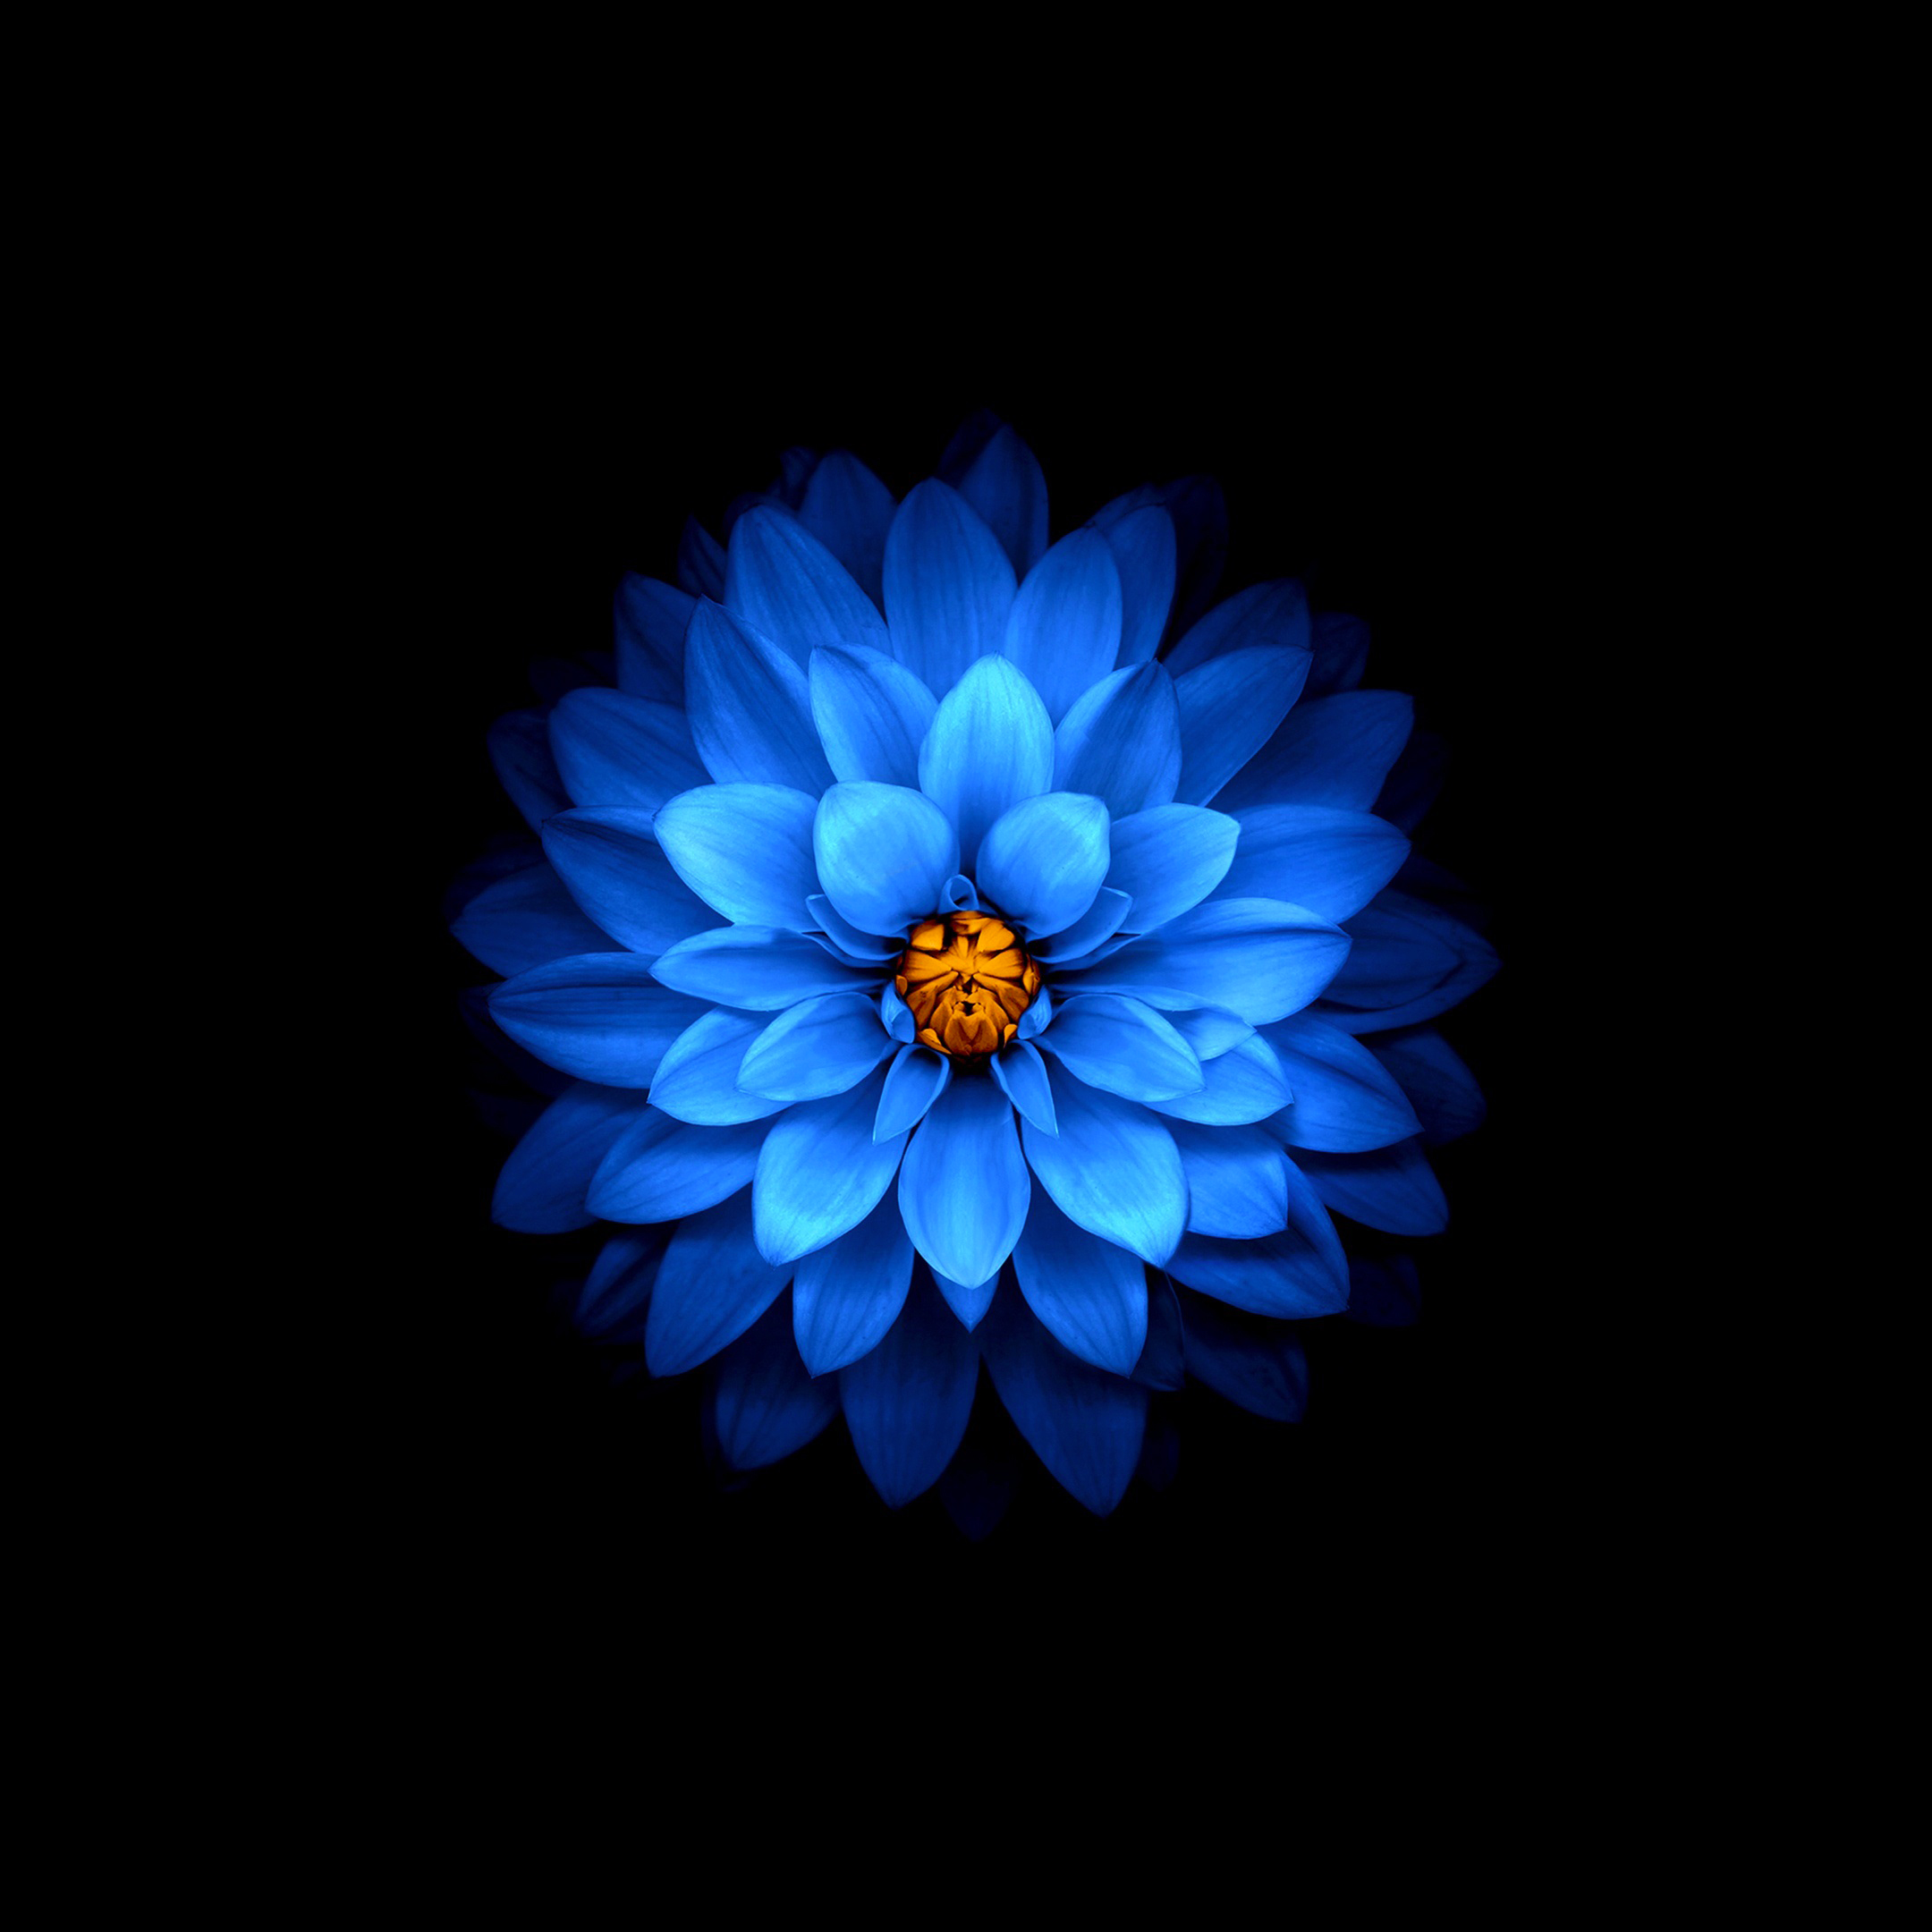 Blue Flower on Dark Background - Wallpapers Central